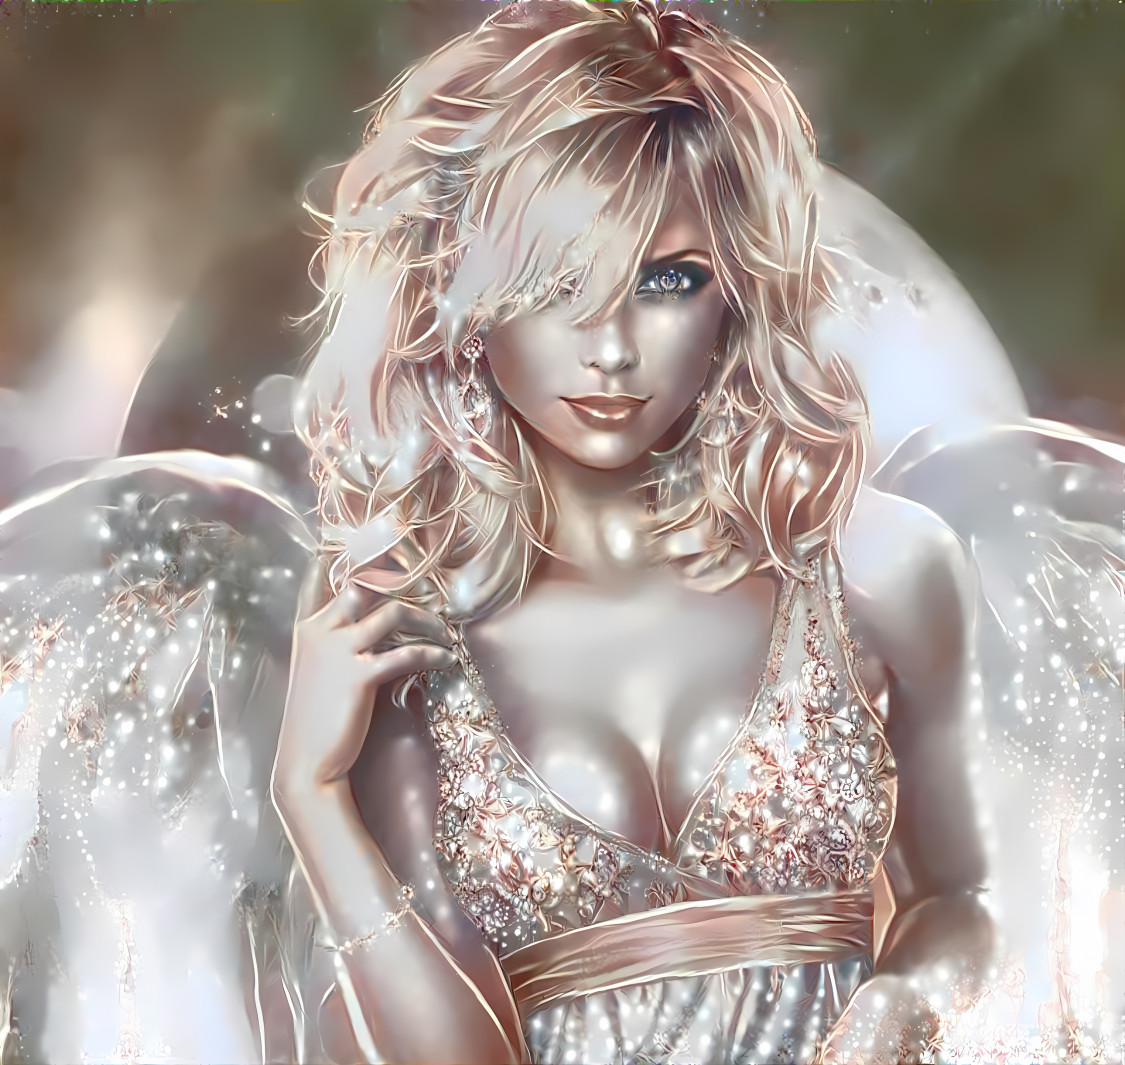 Virgin Angel